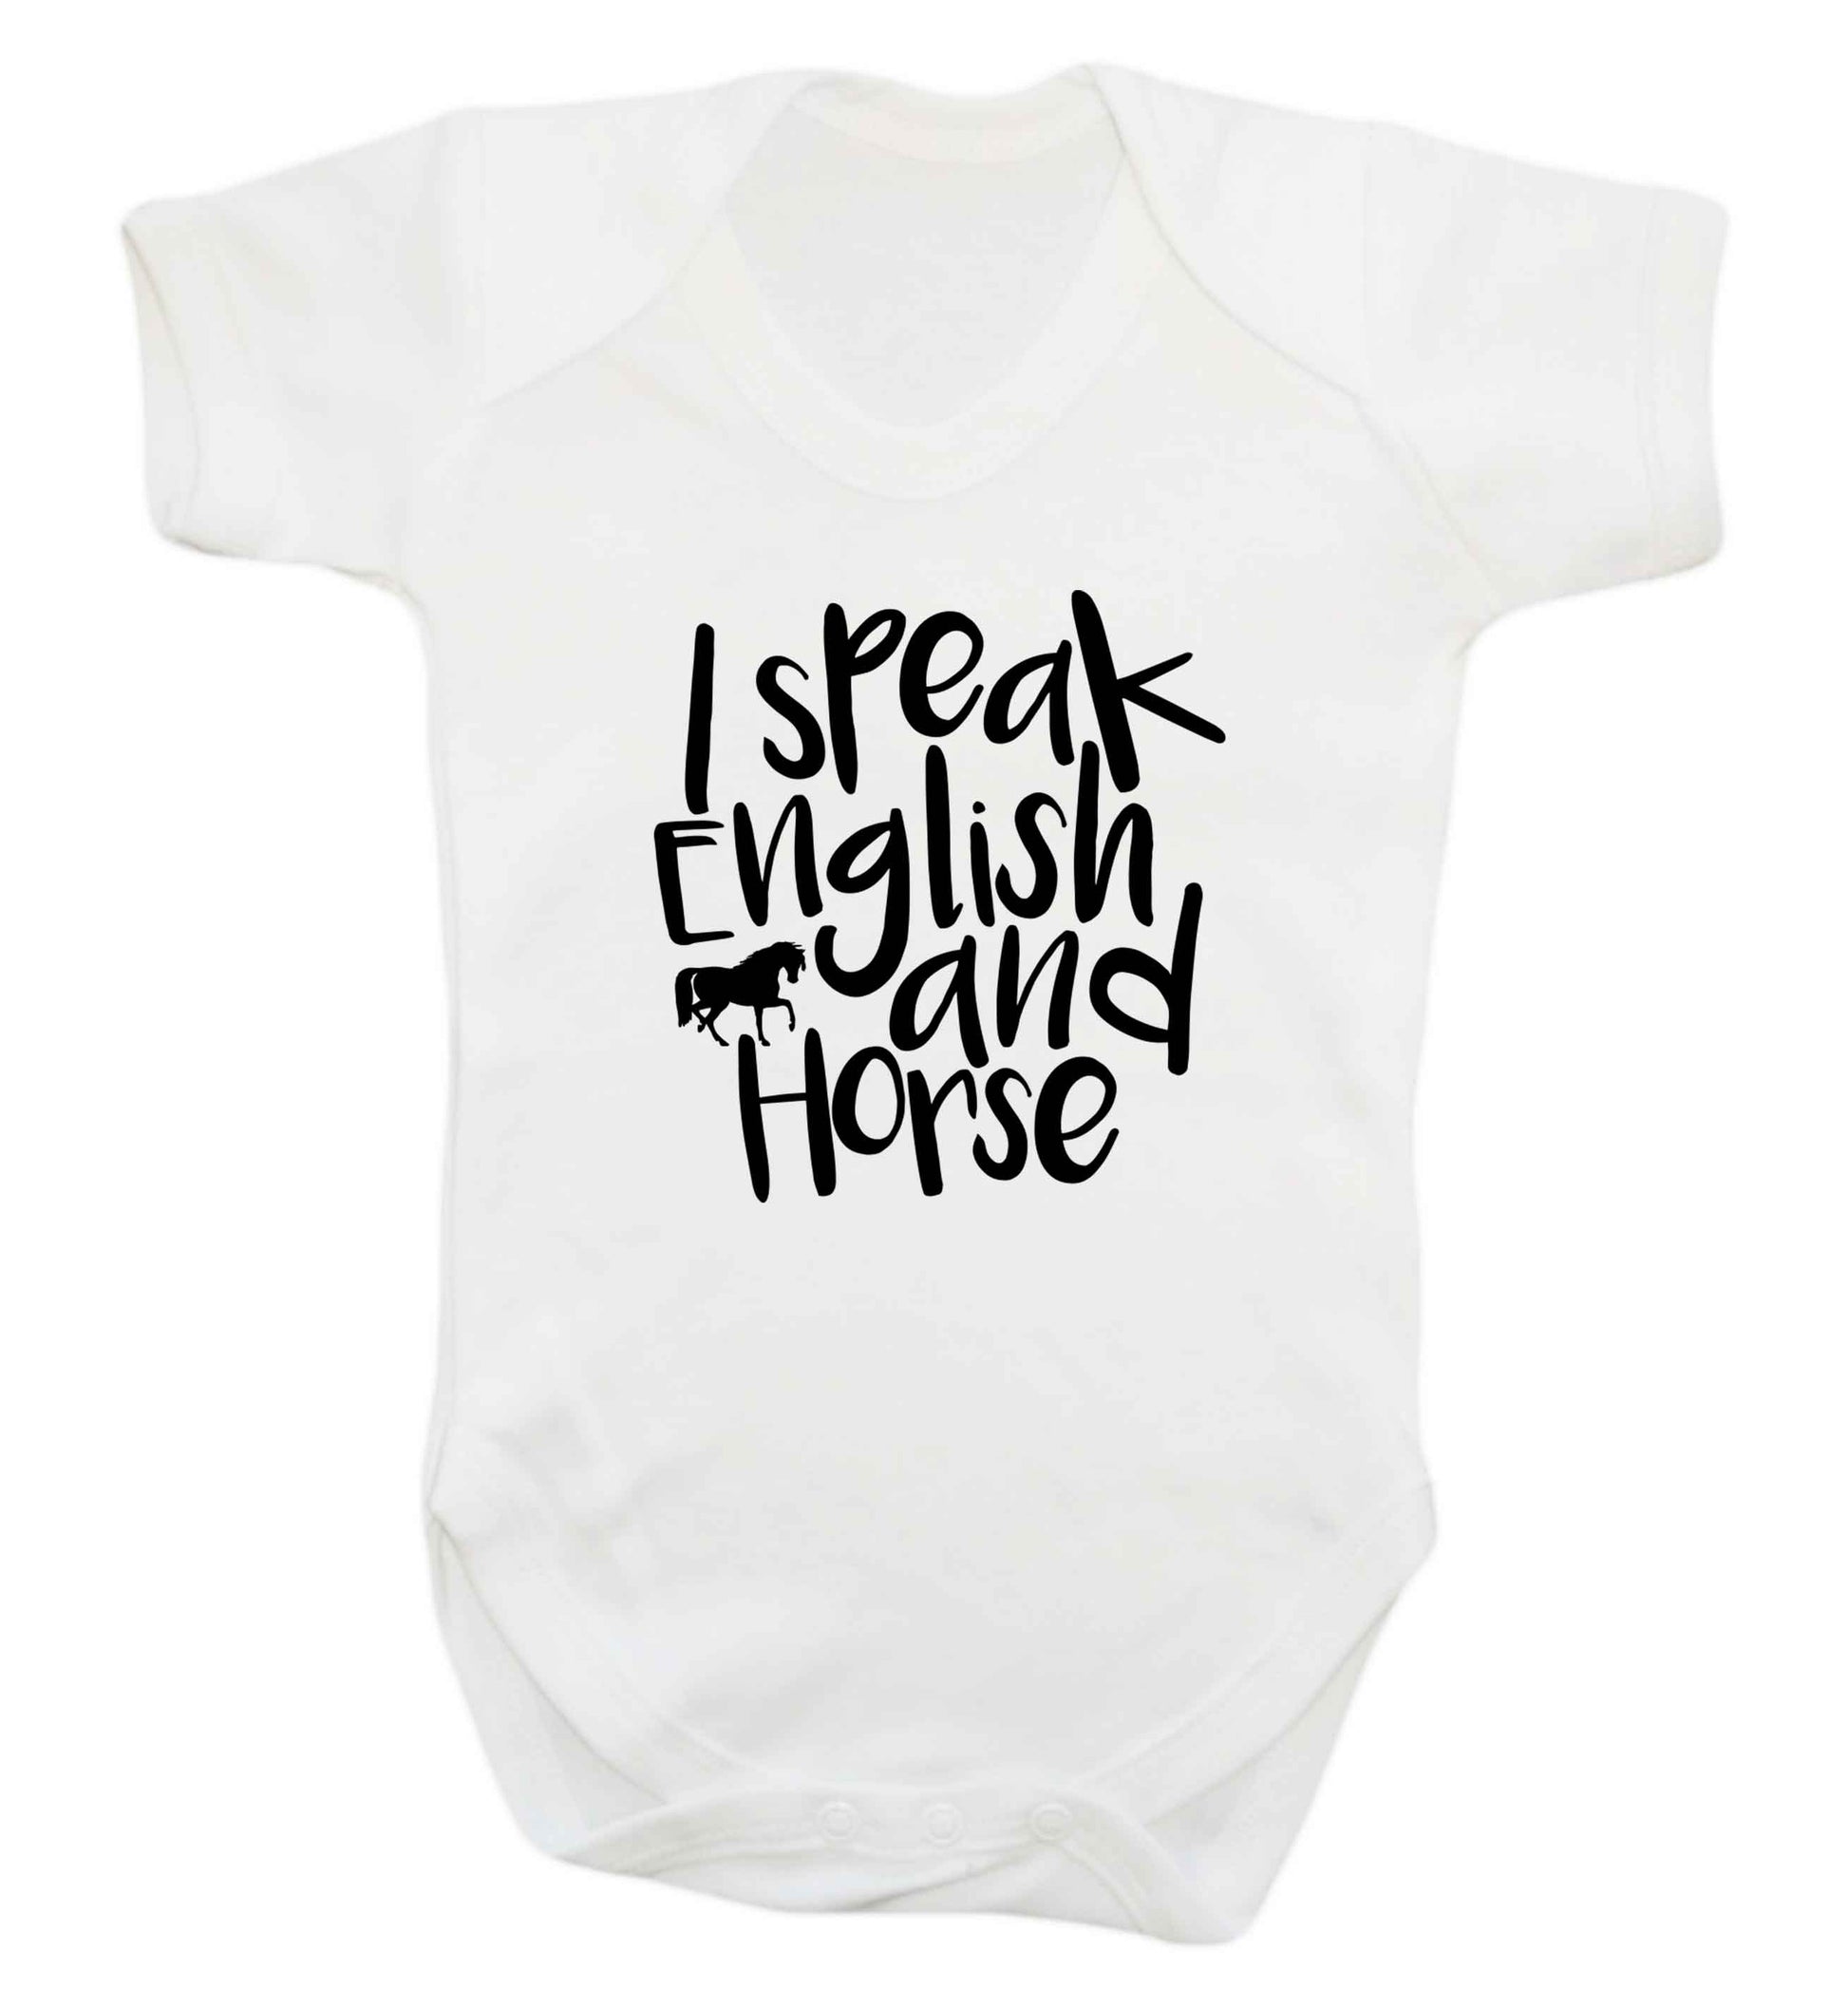 I speak English and horse baby vest white 18-24 months